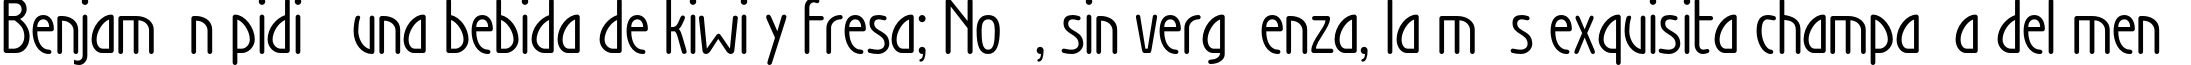 Пример написания шрифтом Wien текста на испанском